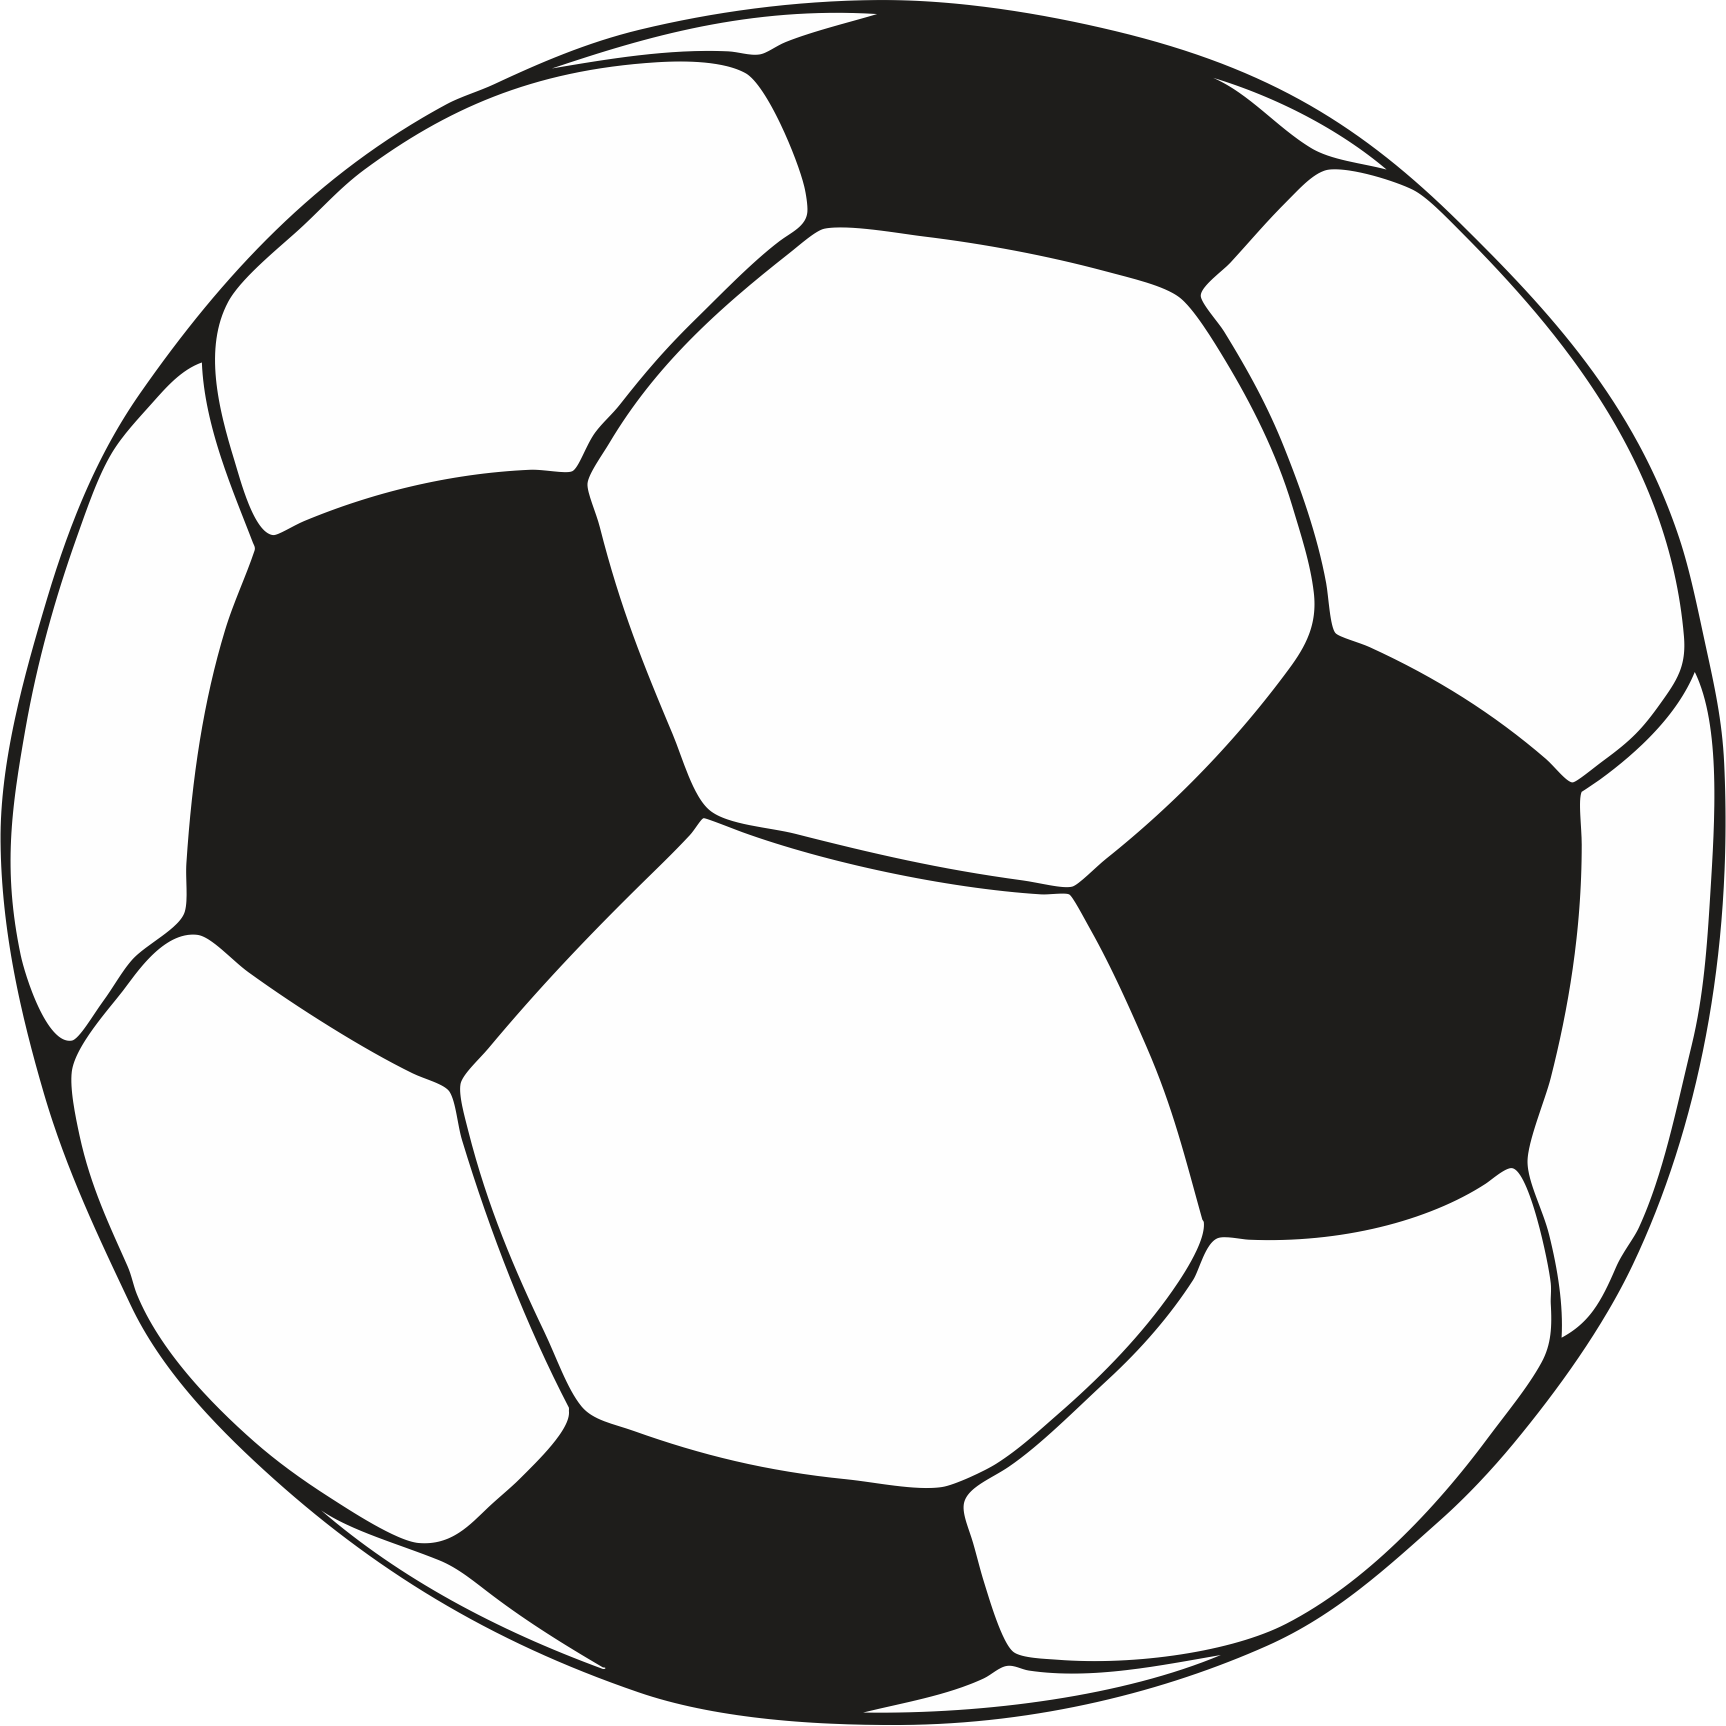 free vector clipart soccer ball - photo #8